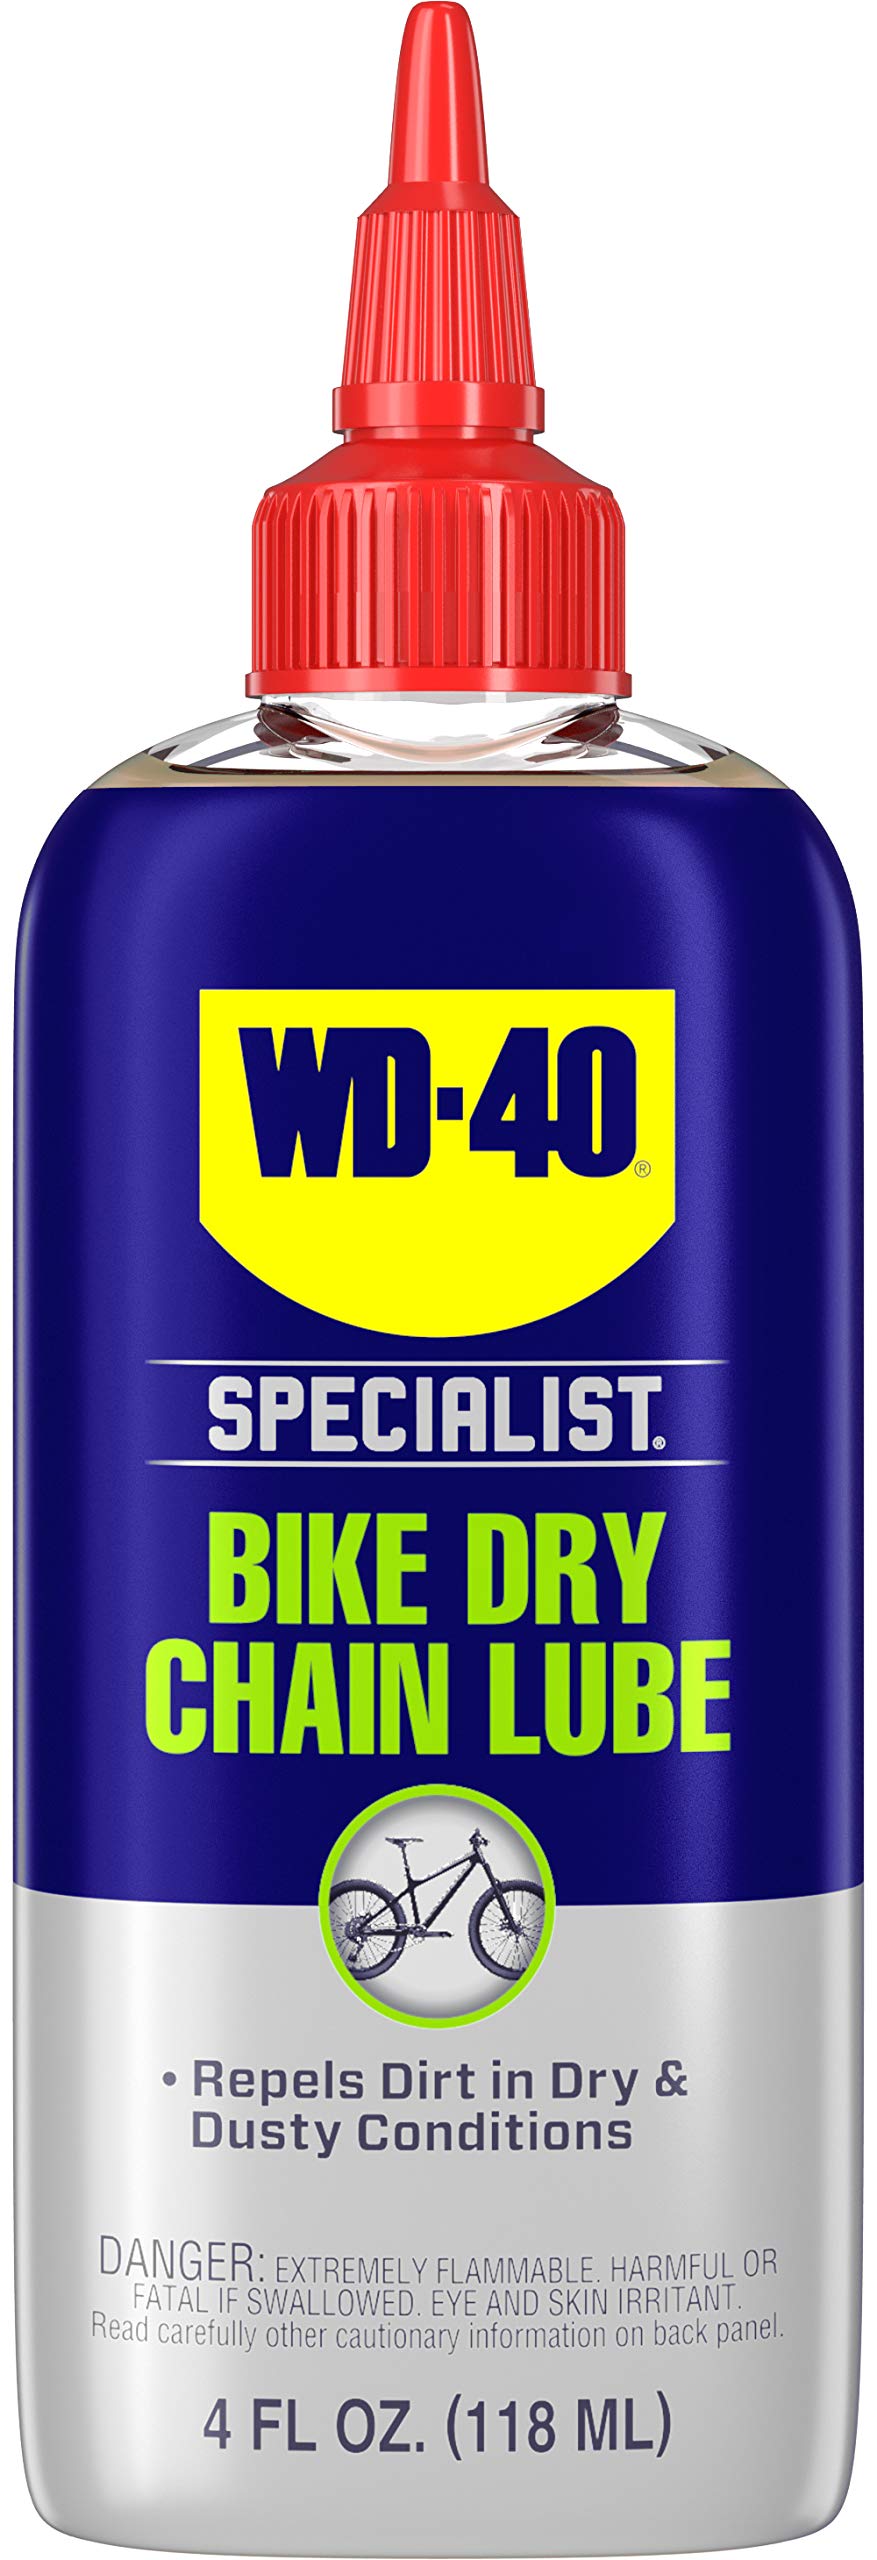 WD-40 Specialist Motorbike Total Wash 1L